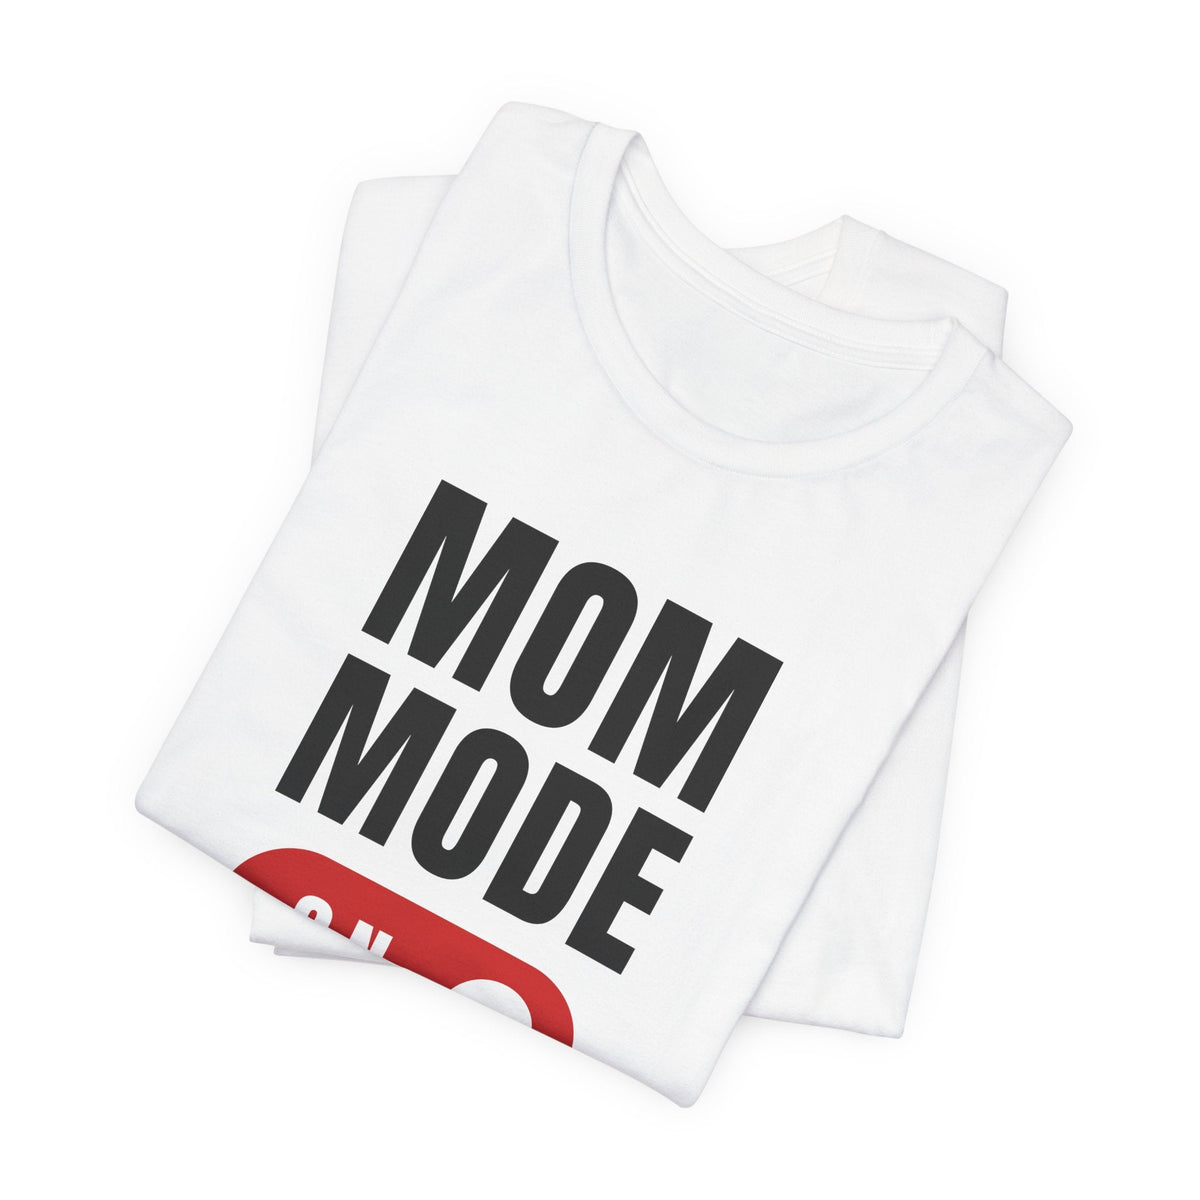 Mom Mode On Short Sleeve Tee - Eventwisecreations